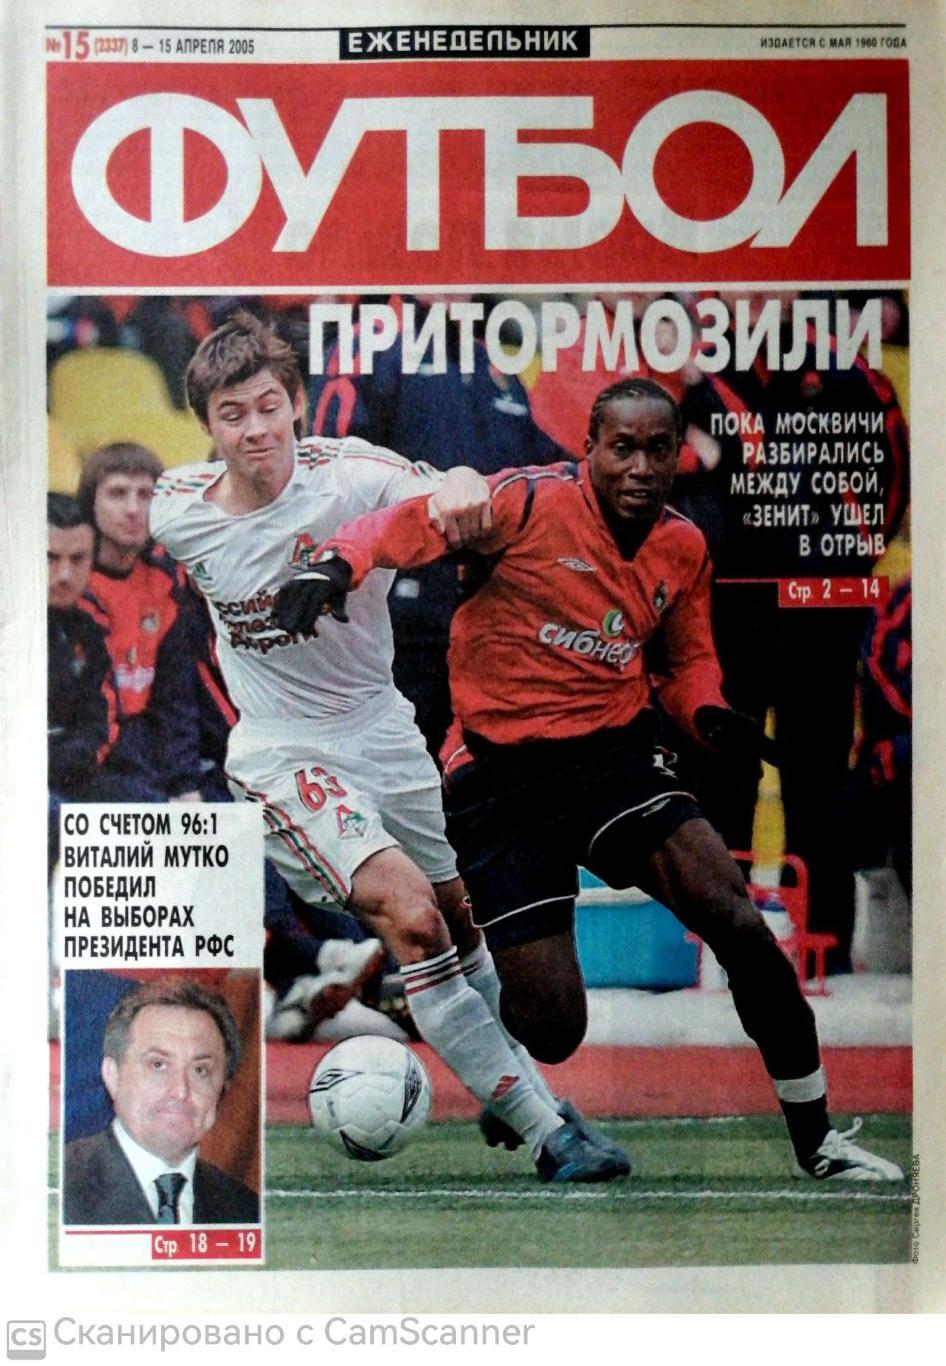 Еженедельник «Футбол» (Москва). 2005 год. №15